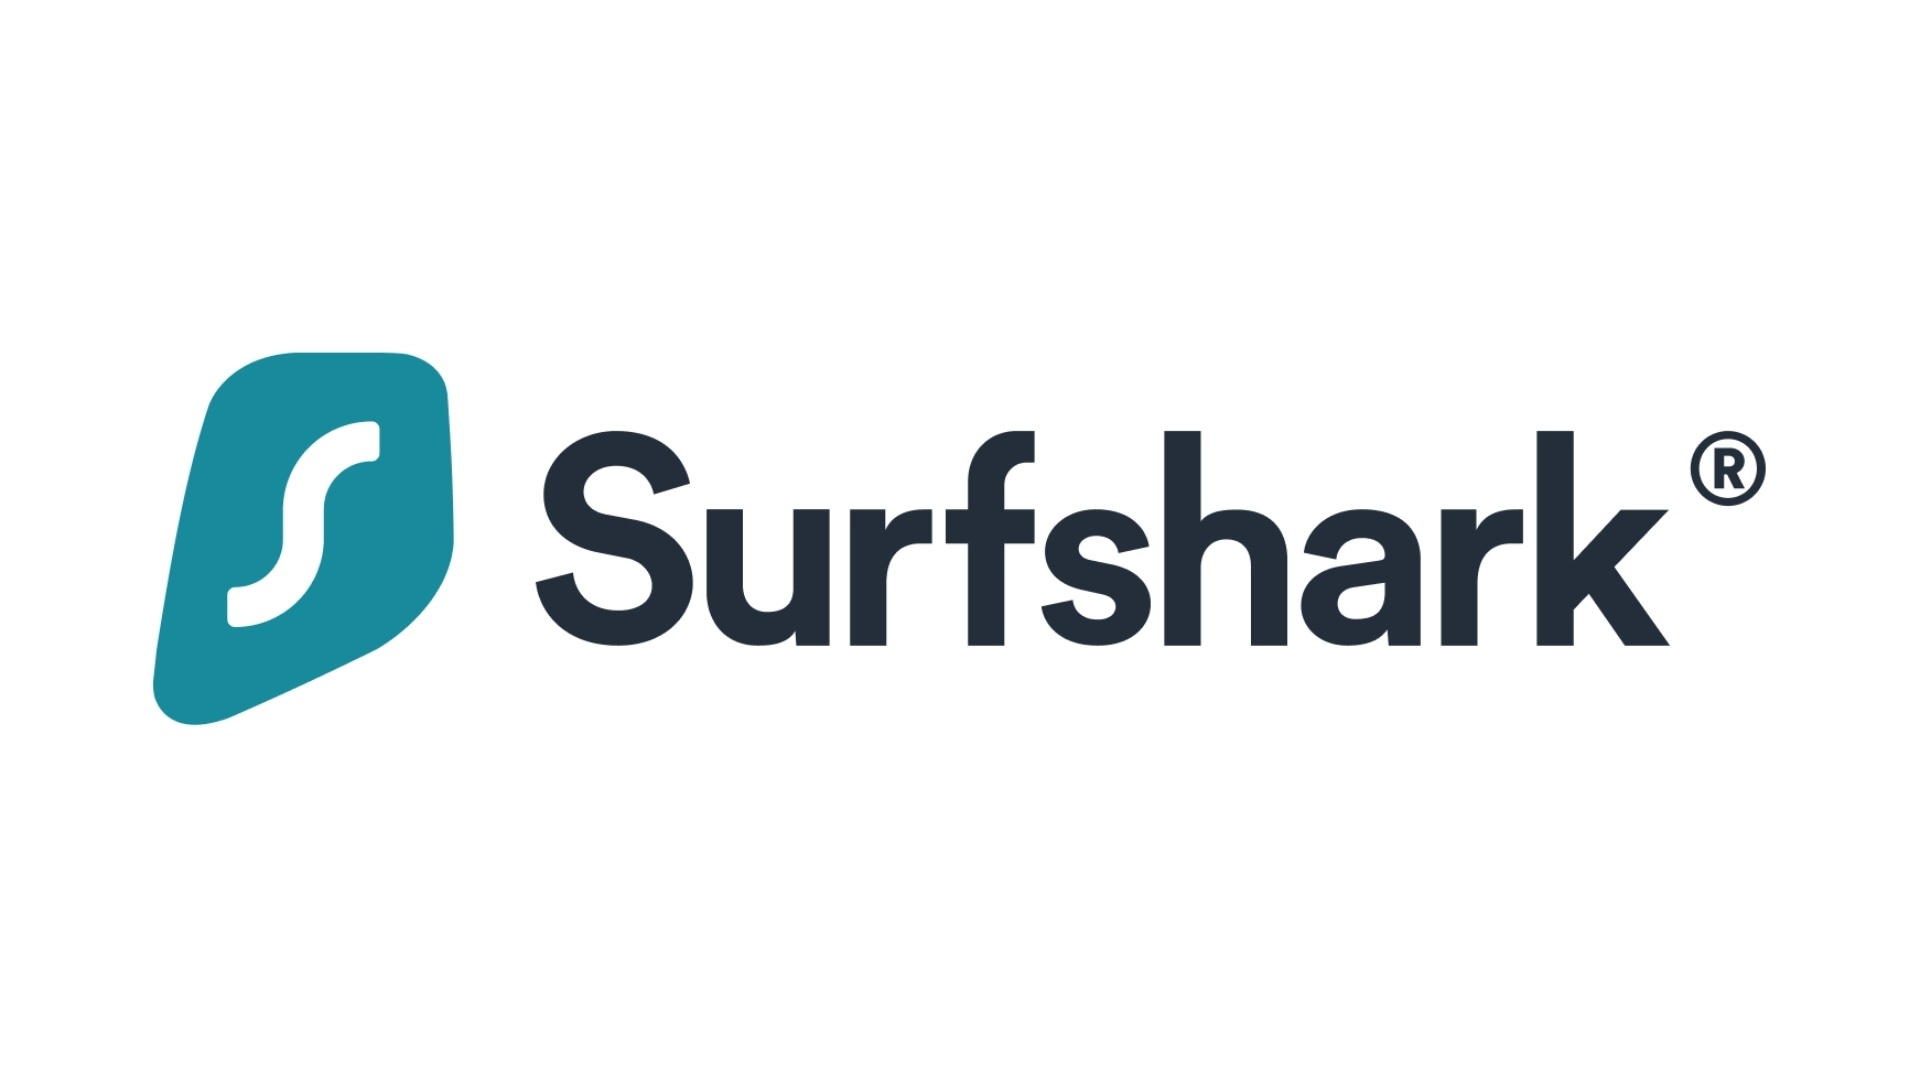 VPN servers for Surfshark. Image shows the company logo.